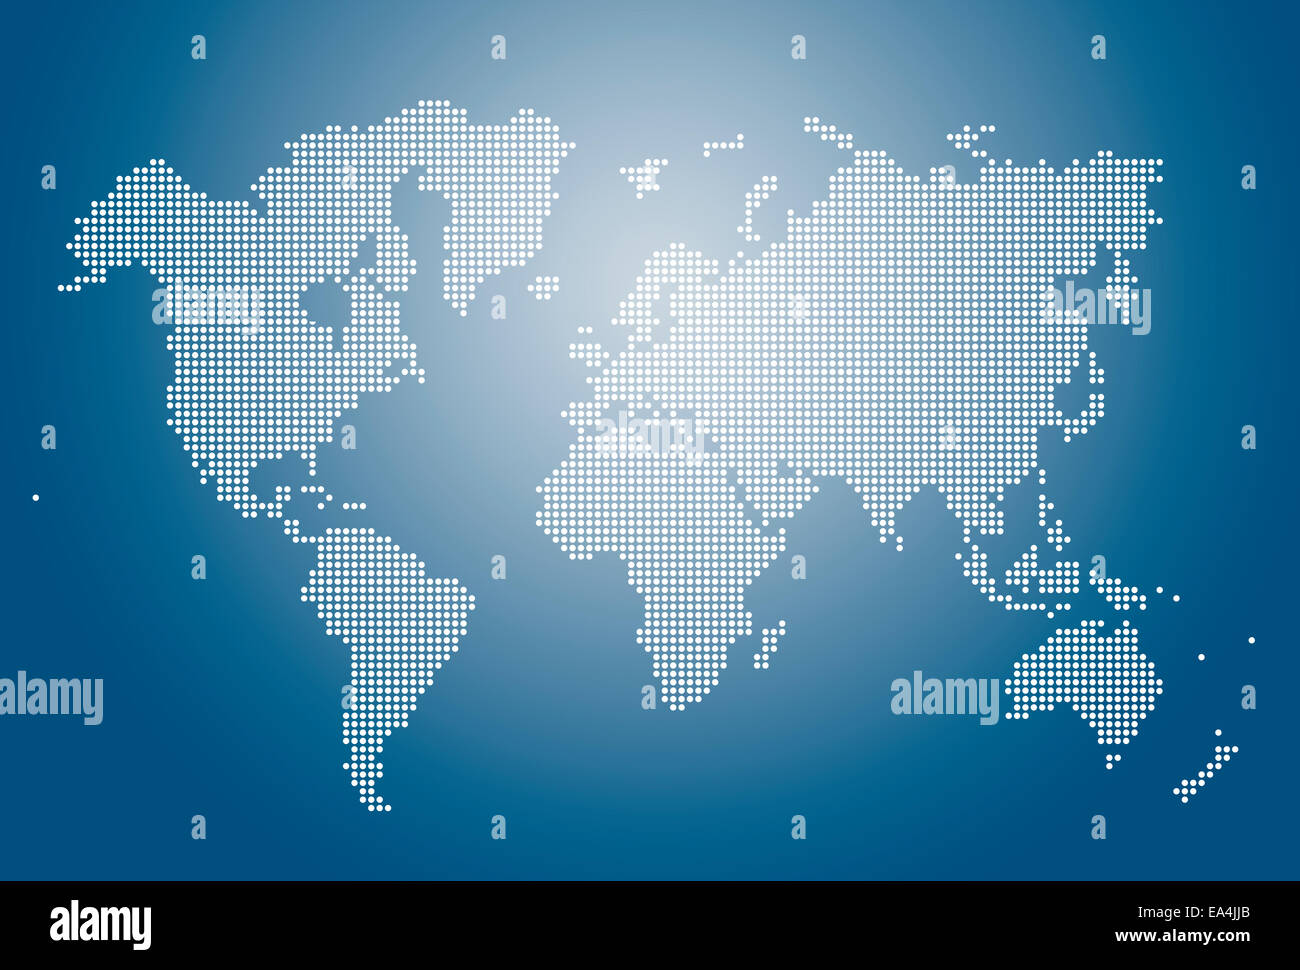 Image of modern world map illustration Stock Photo